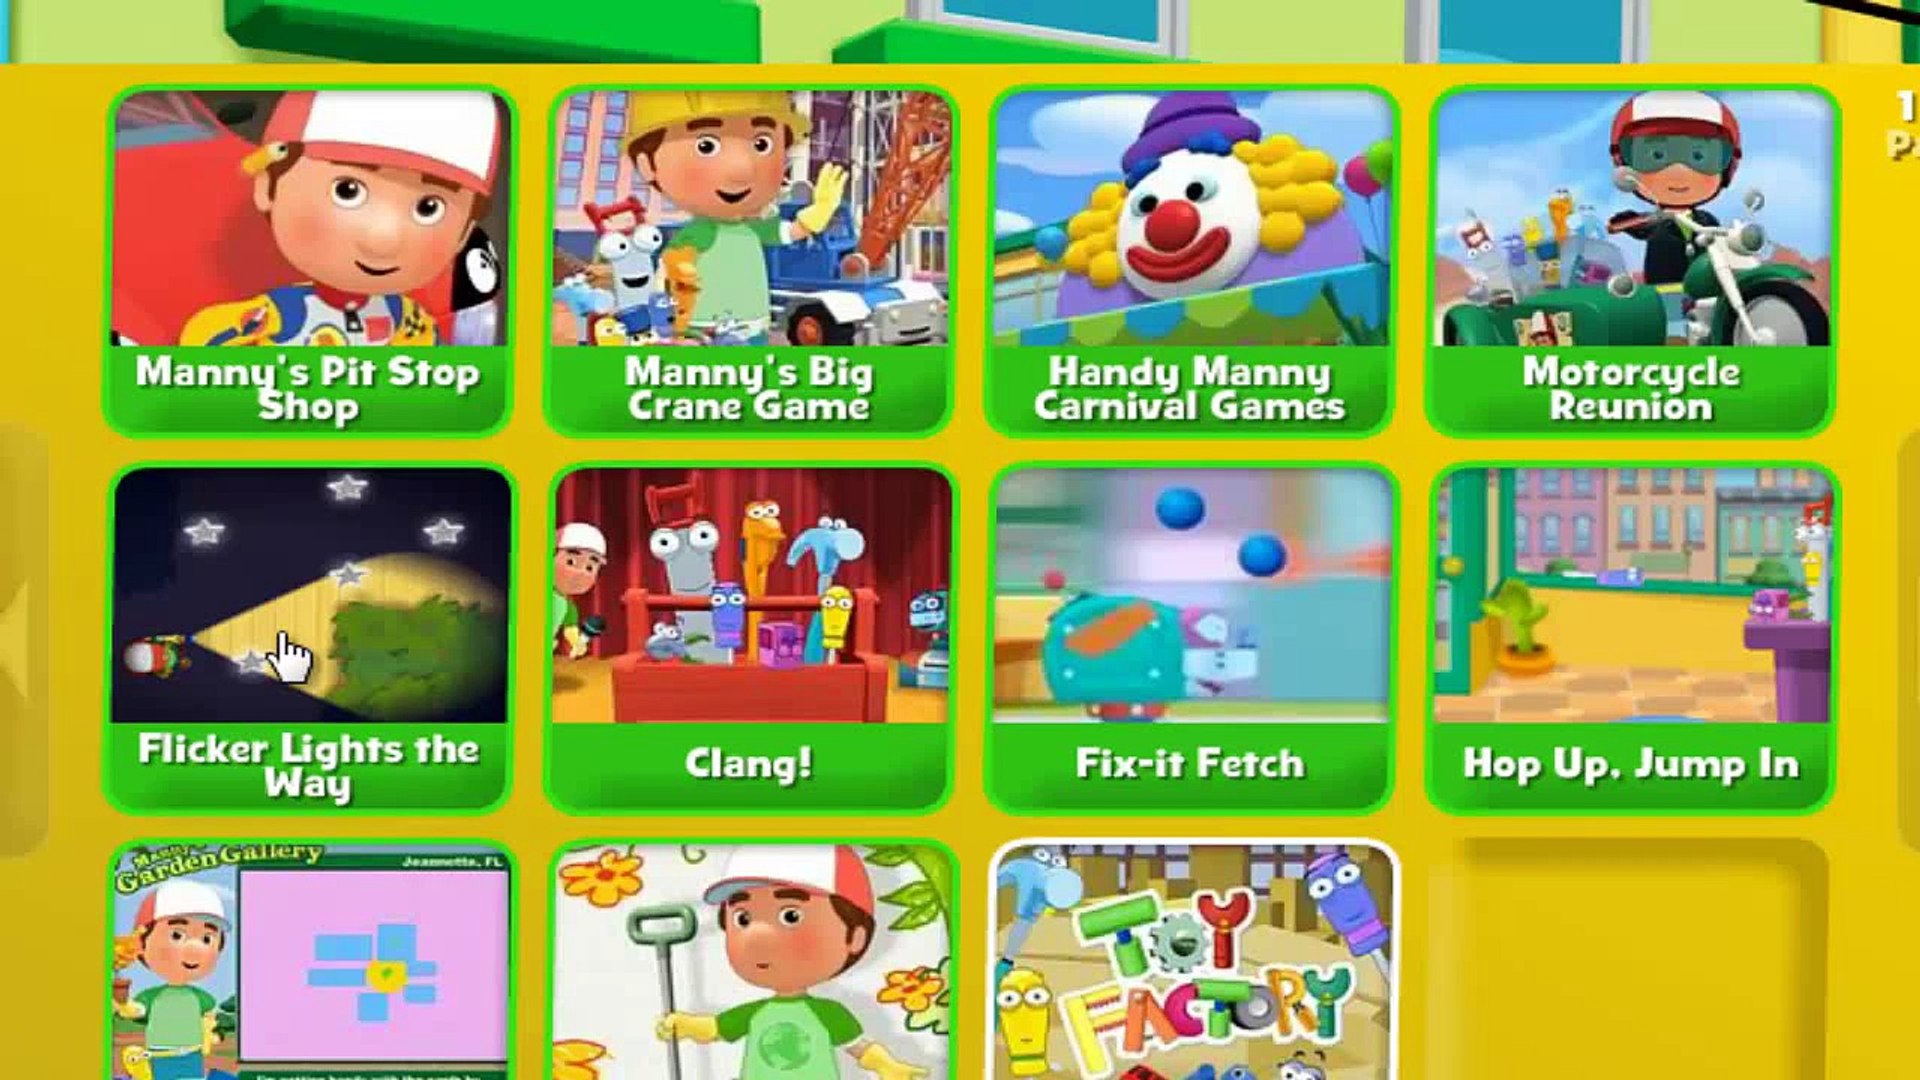 Handy Mannys Flicker Lights The Way - Disney Jr Children Games To Play -  video Dailymotion